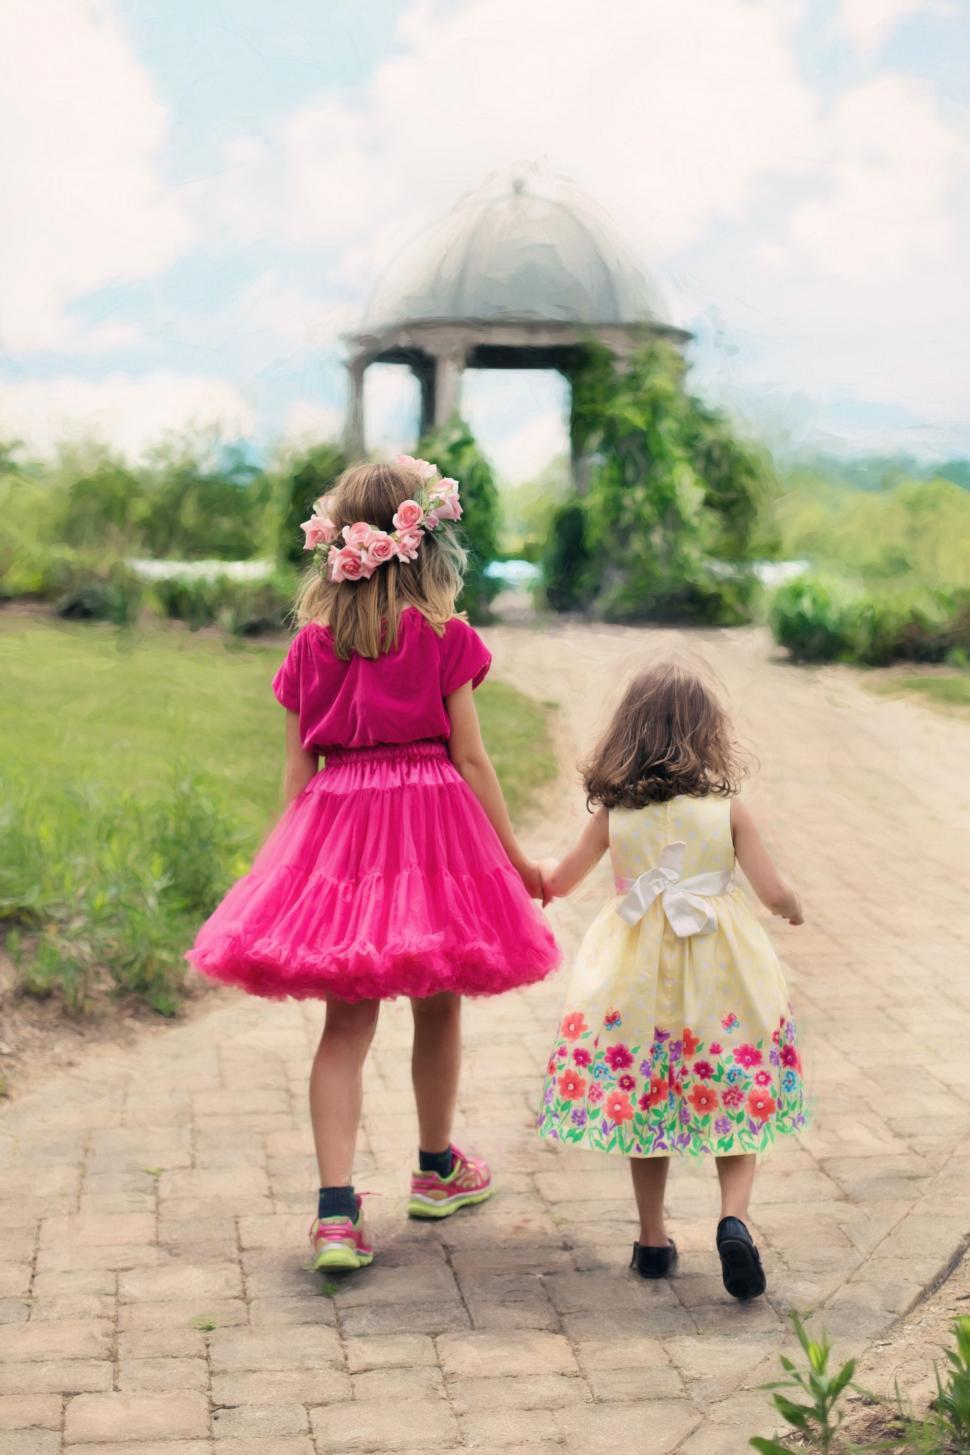 Free Image of Little Girls walking through the park  